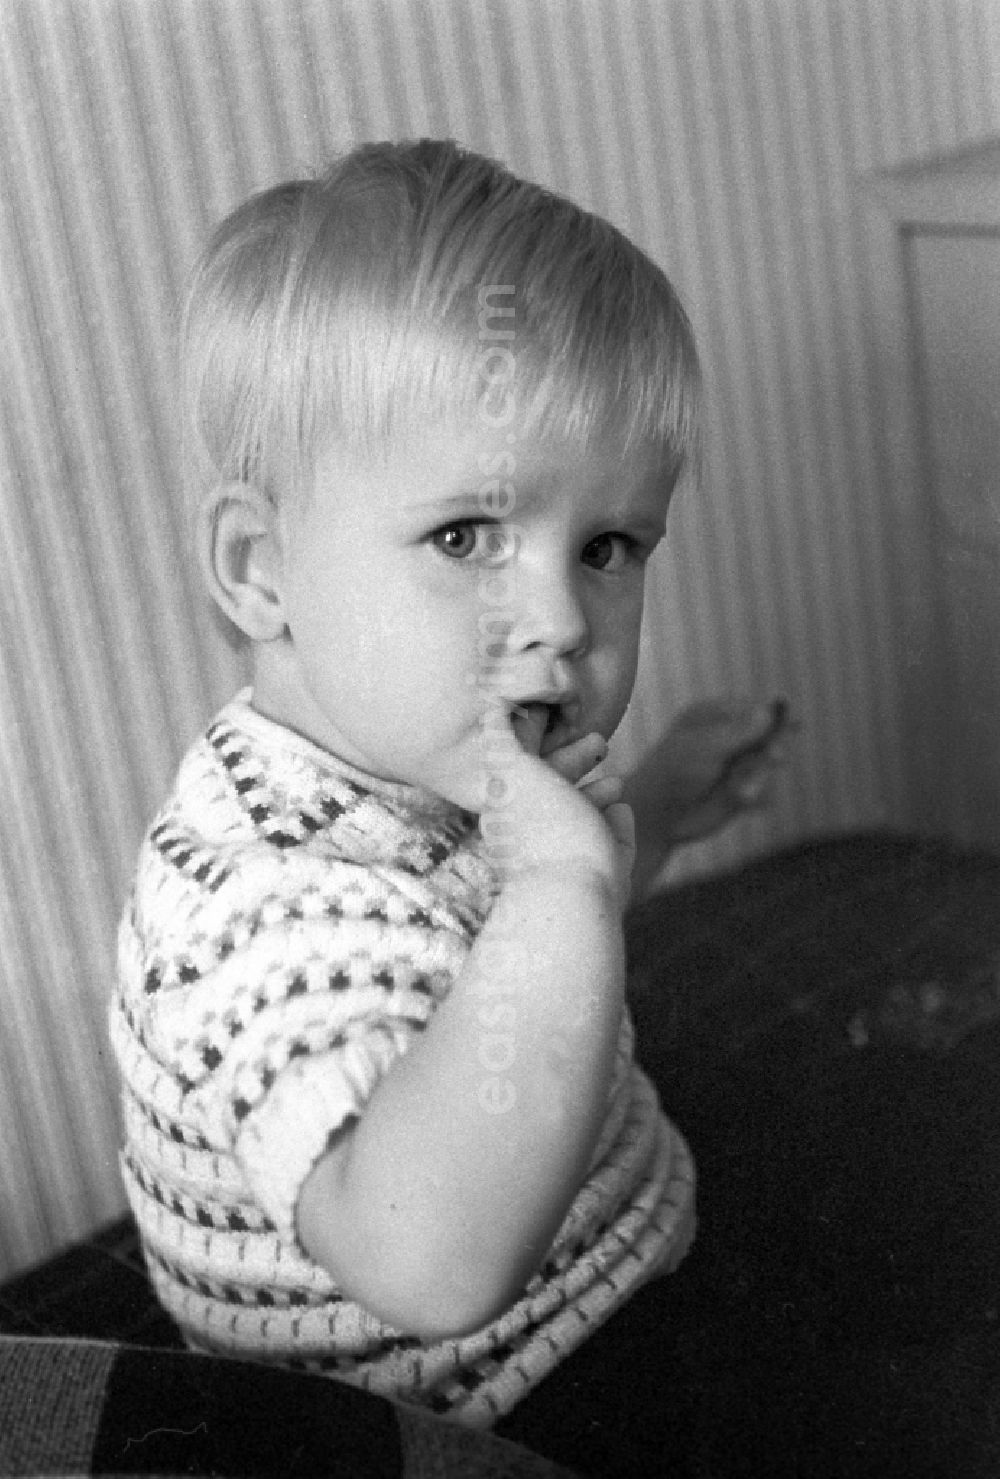 GDR photo archive: Berlin - Friedrichshain - A little blond boy with knit sweater in Berlin - Friedrichshain